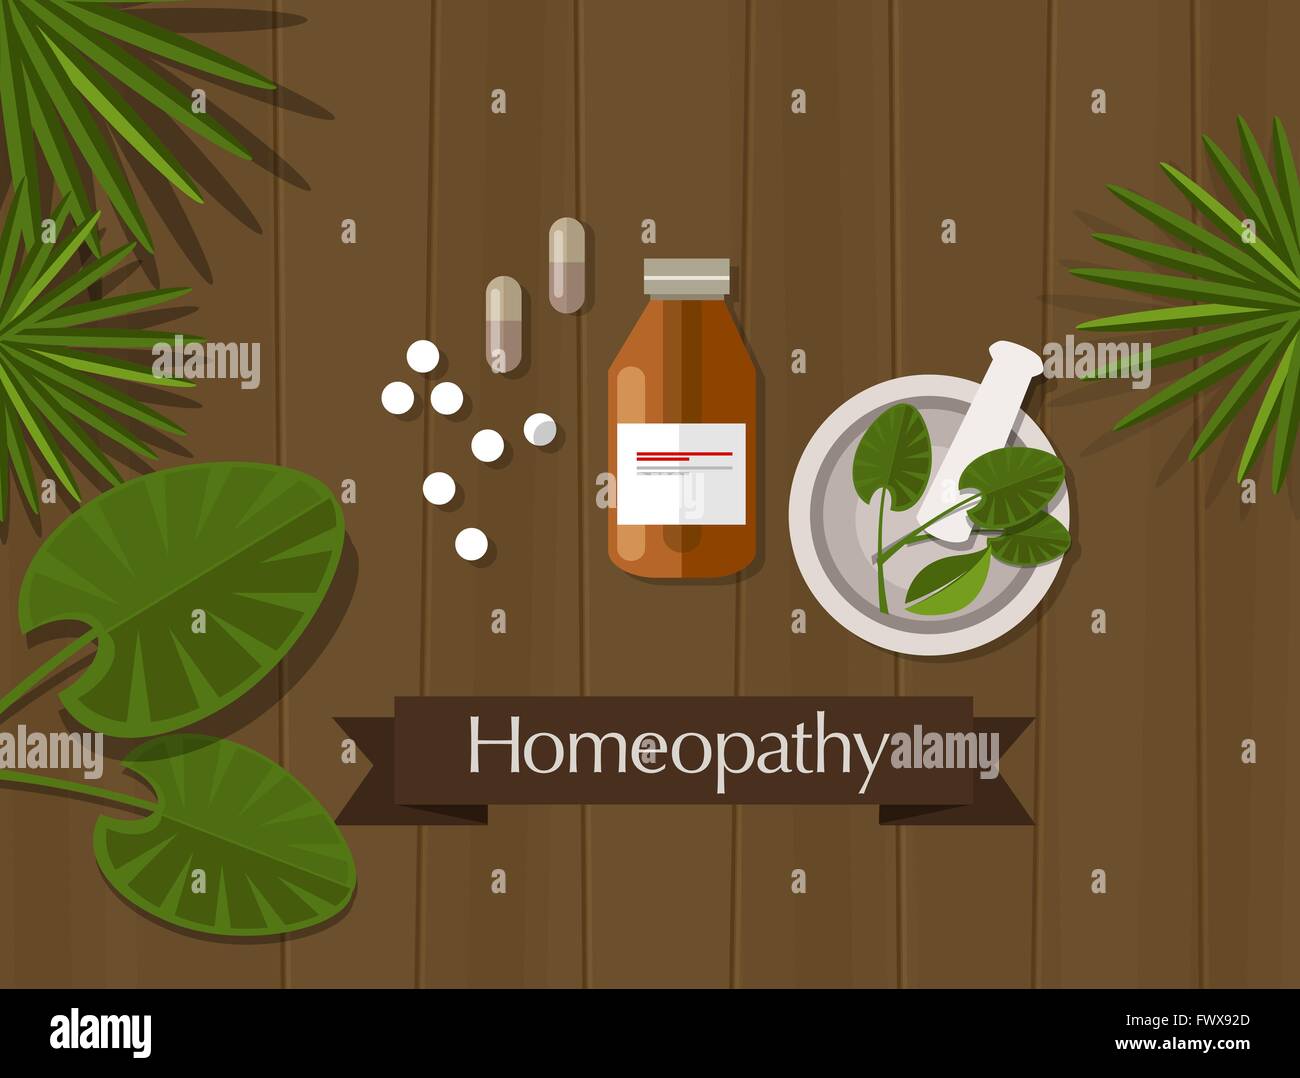 homeopathy natural herbal medicine alternative Stock Vector